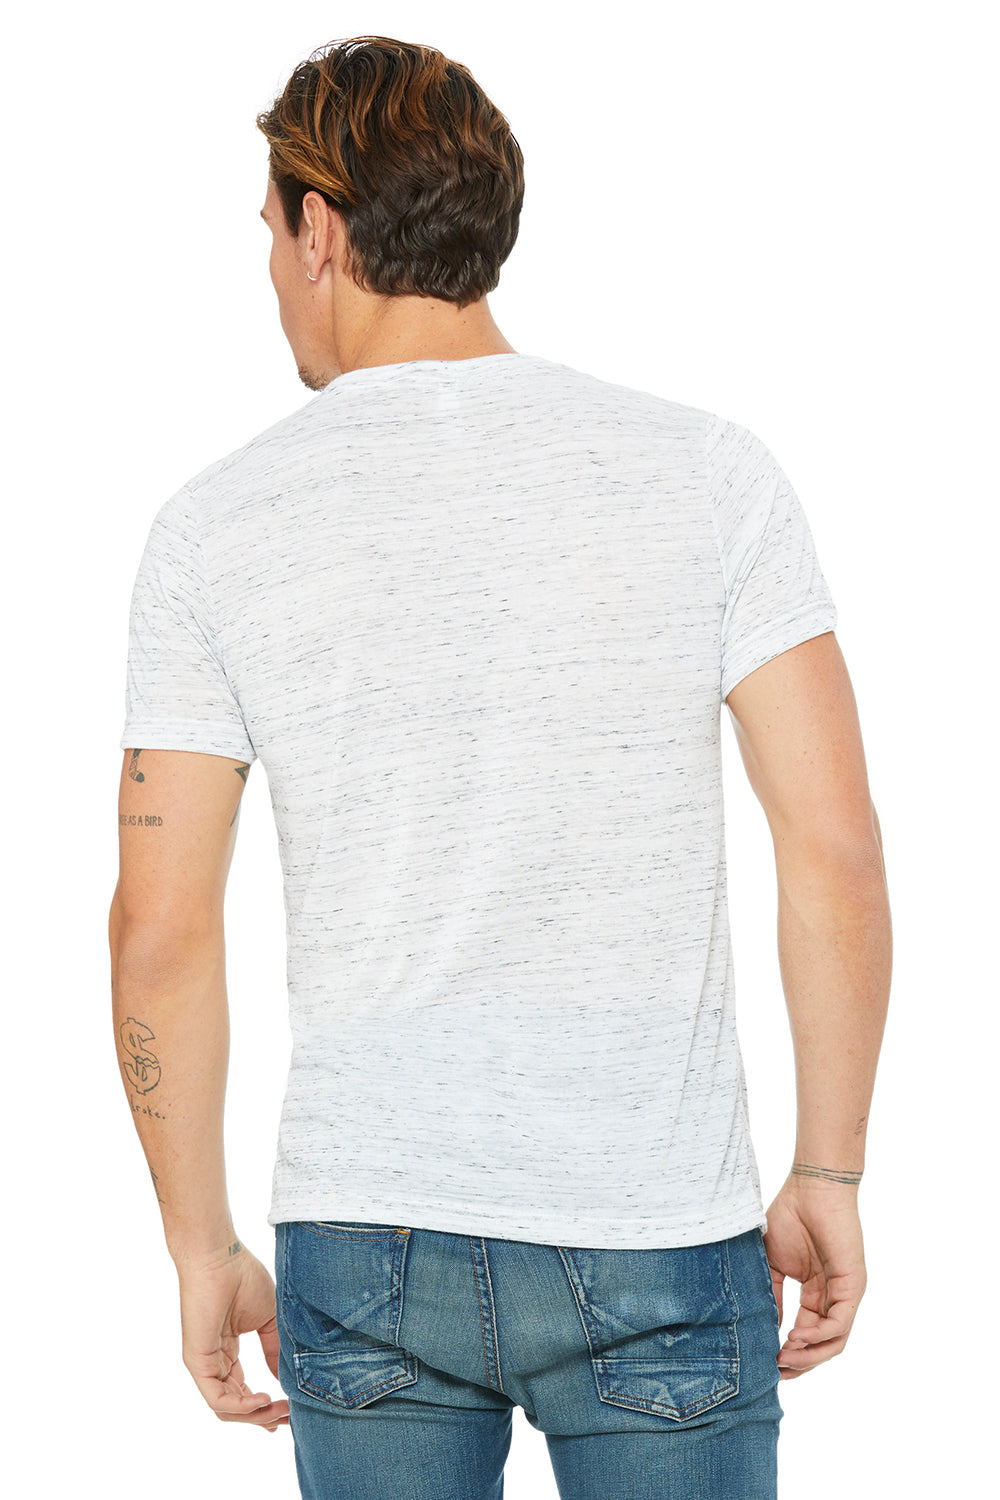 Bella + Canvas BC3005/3005/3655C Mens Jersey Short Sleeve V-Neck T-Shirt White Marble Model Back